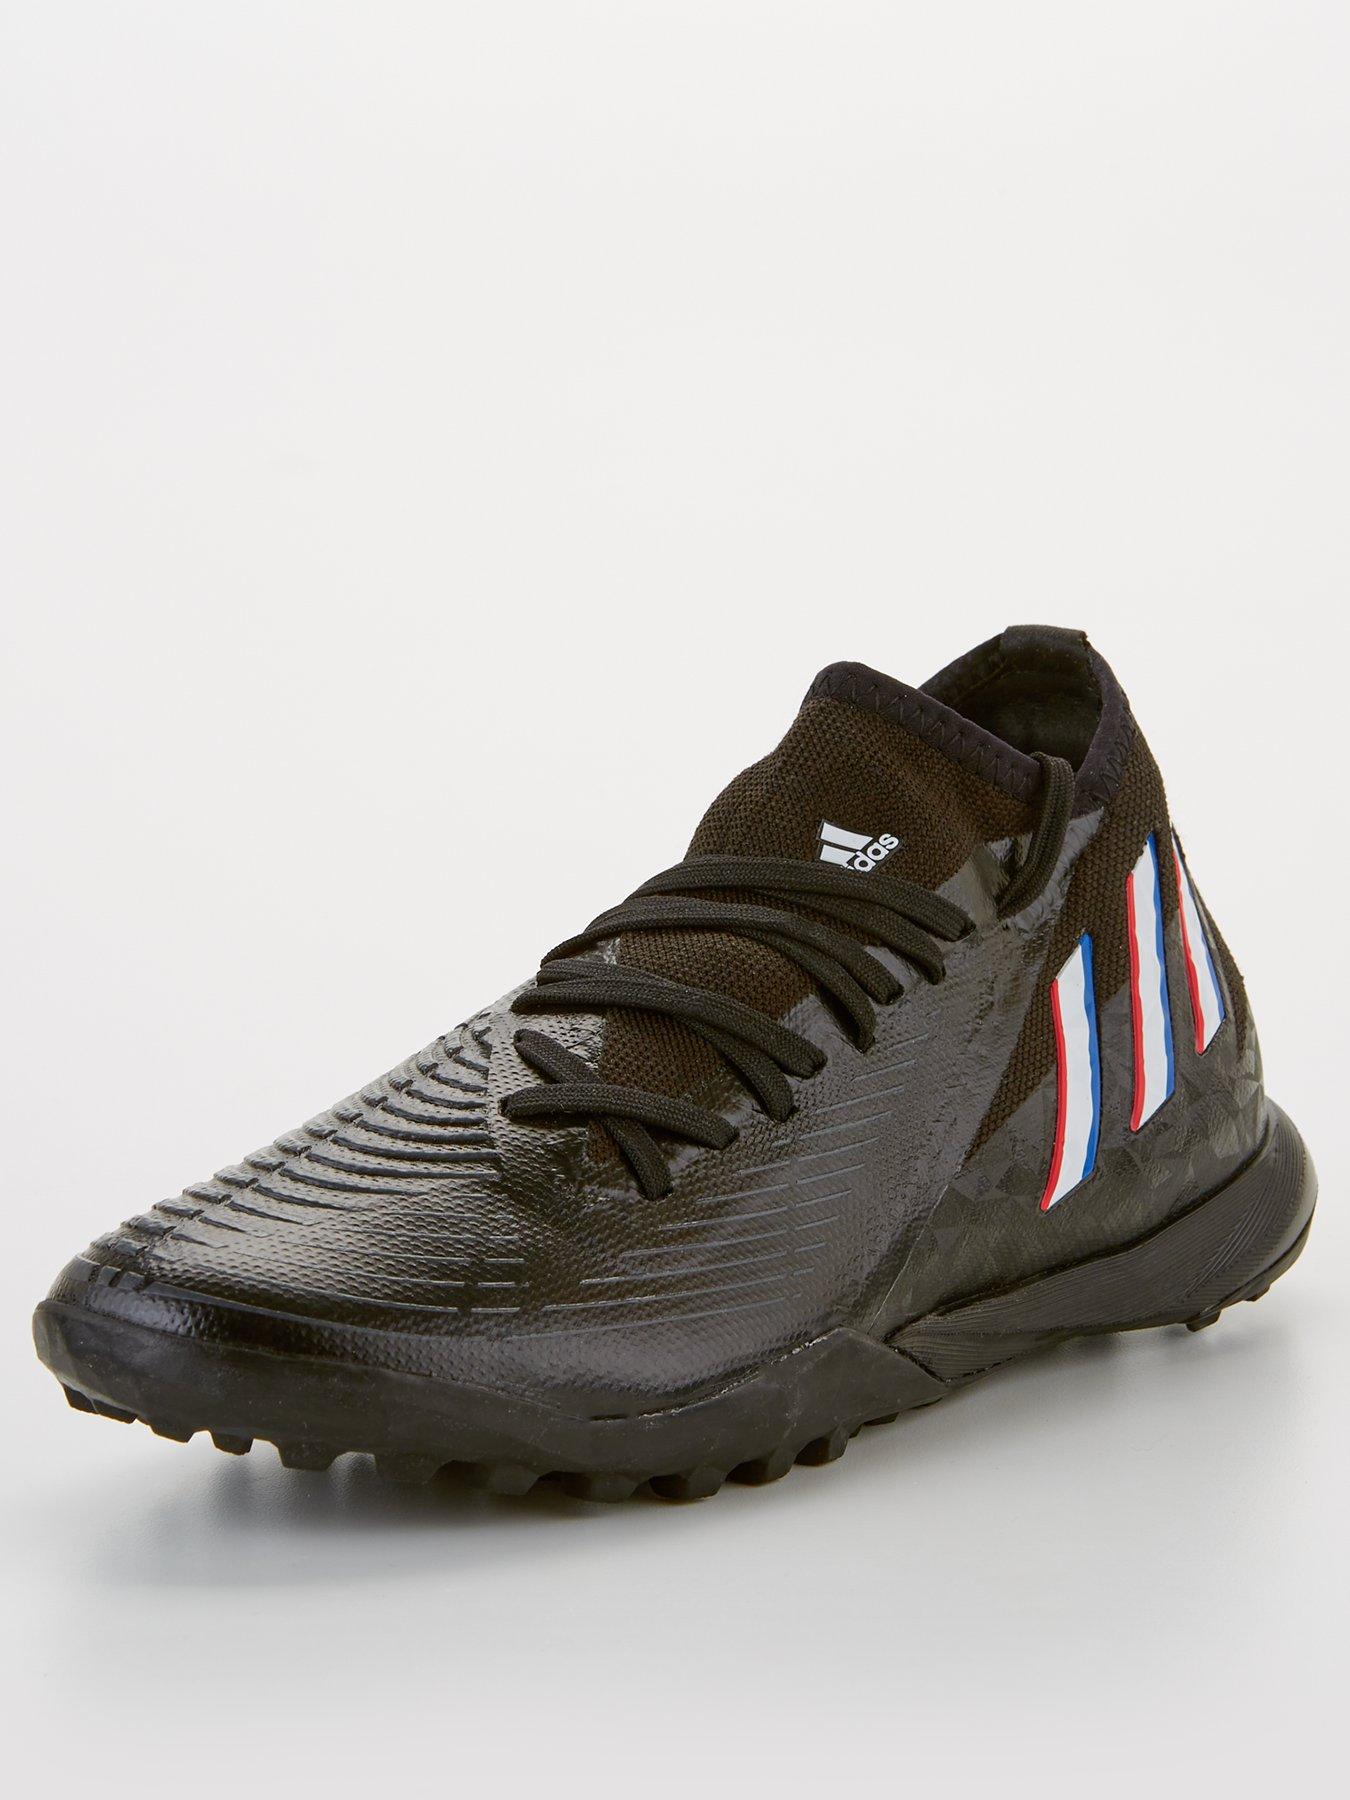 adidas Predator 20.3 Astro Turf Football Boots - Black